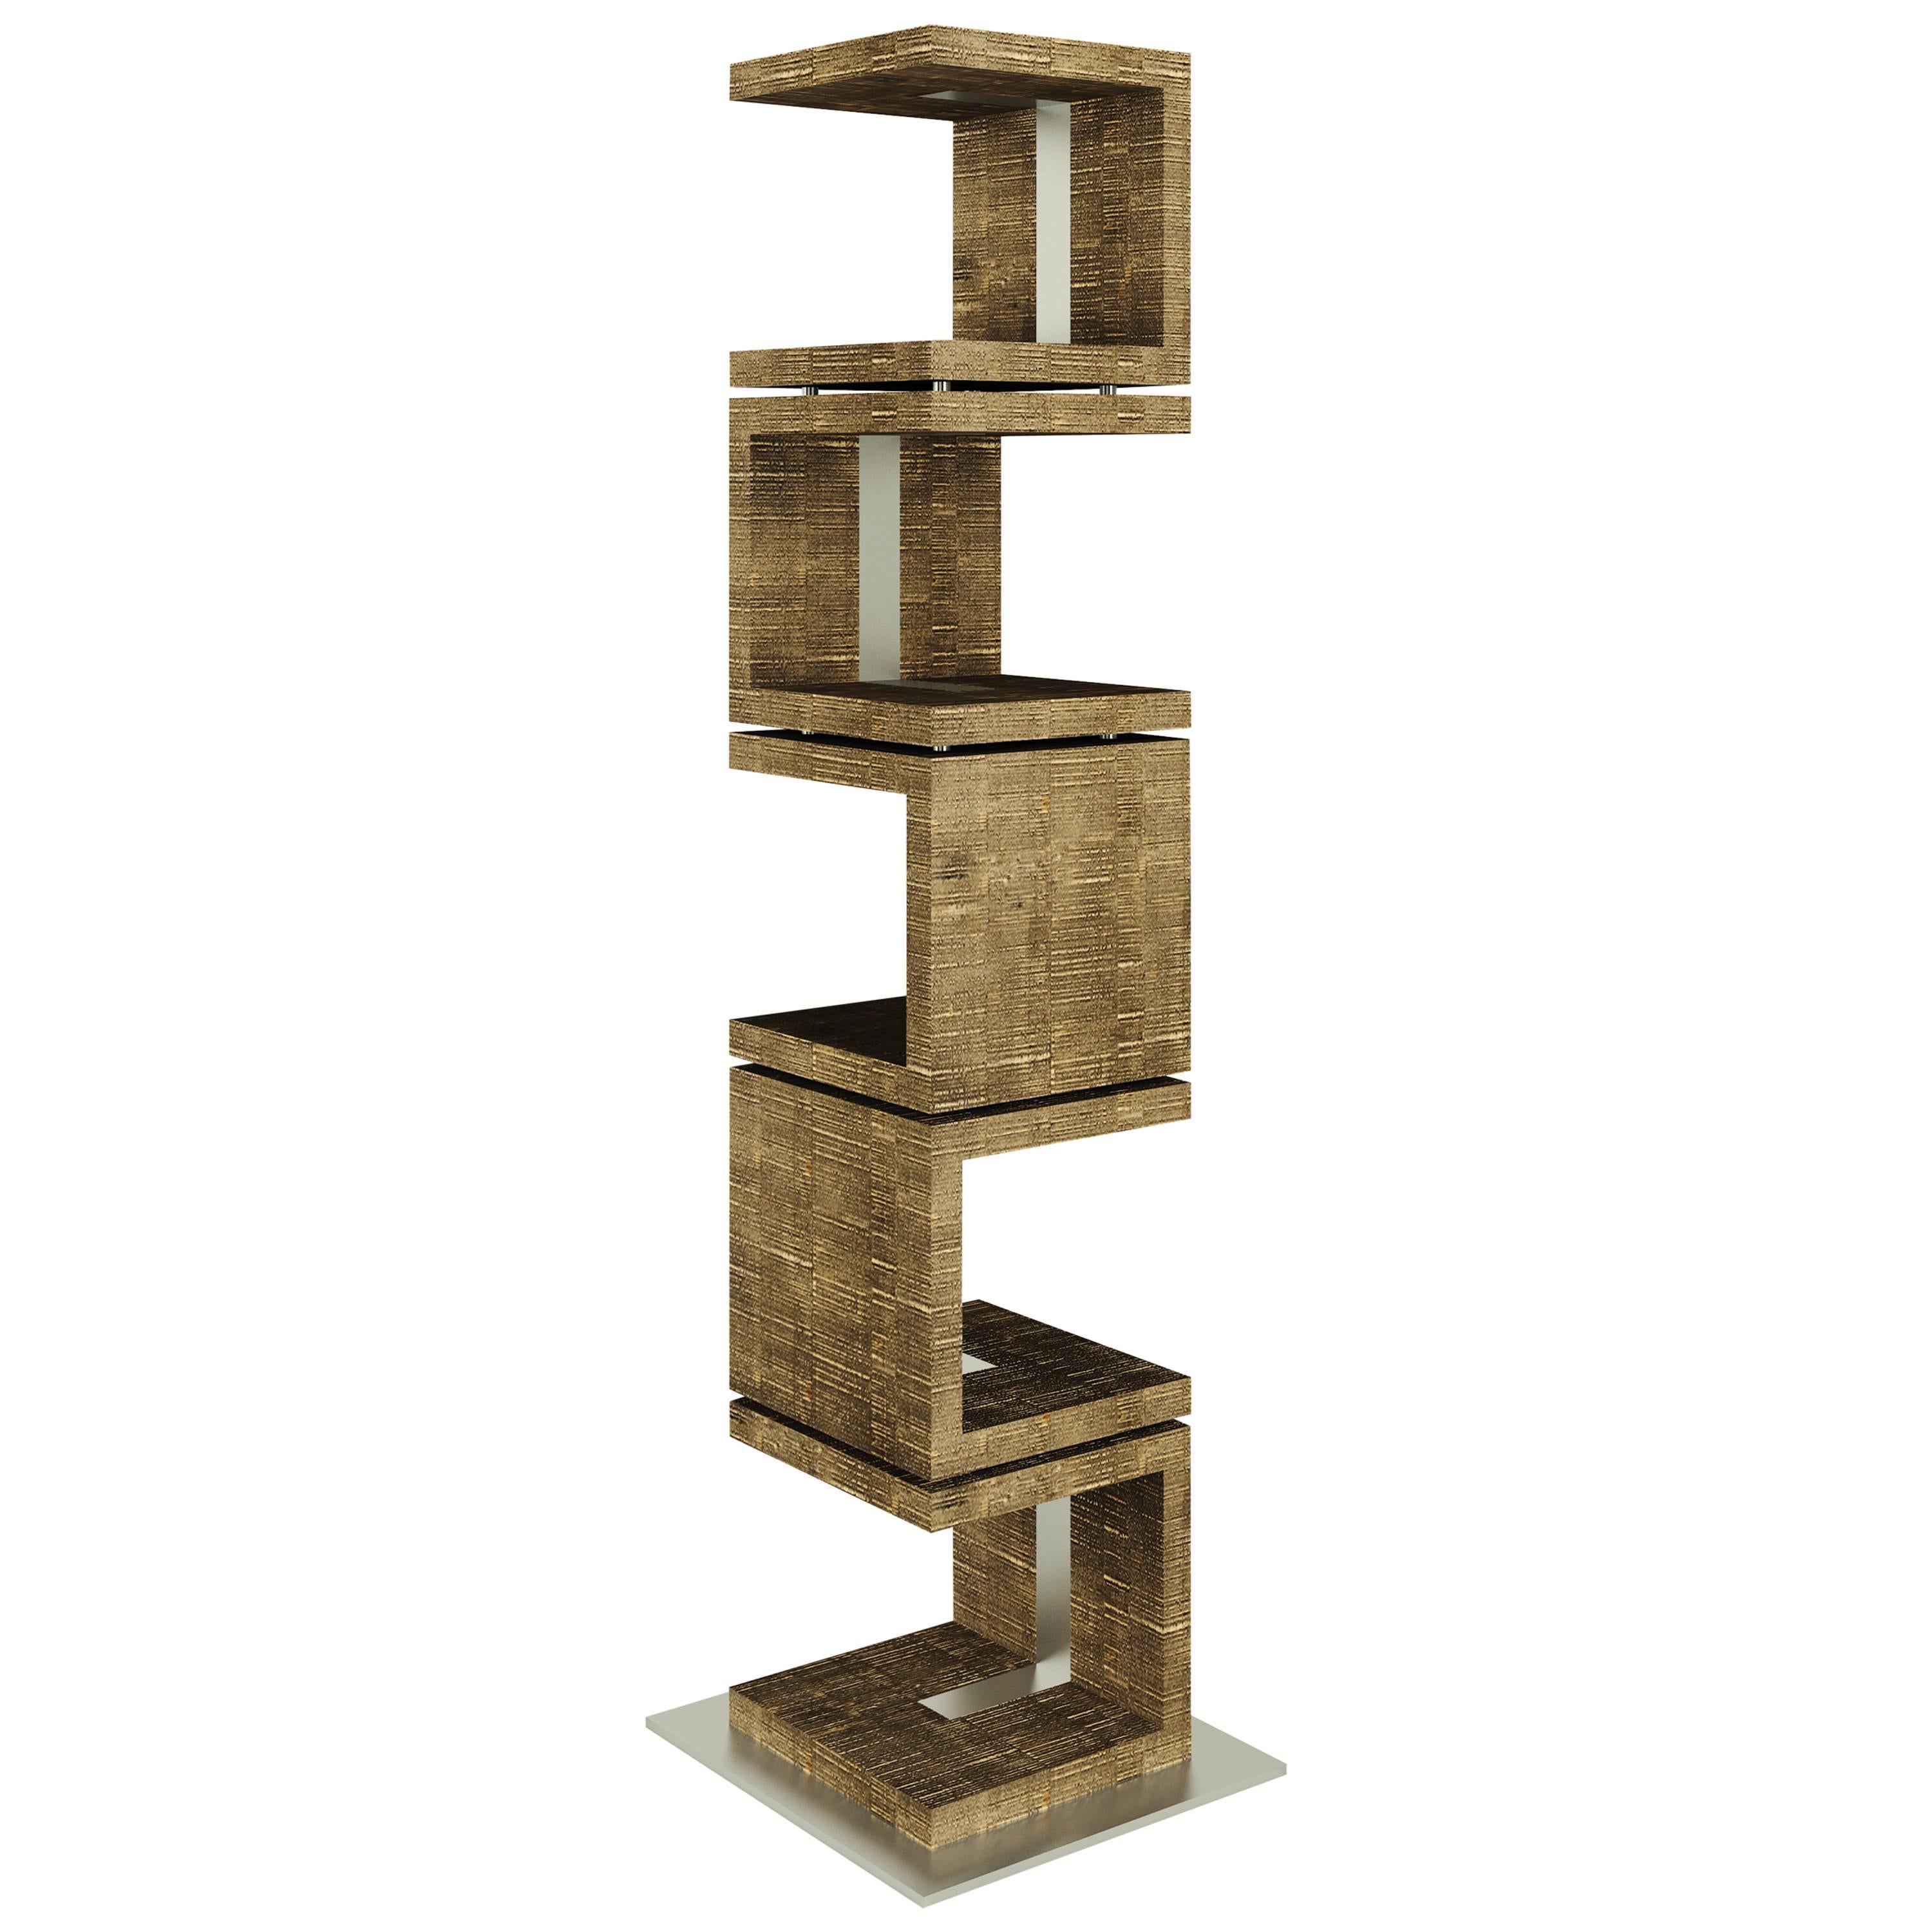 Italian Modern Square Open-Sided Uno Modular Wood Bookshelf For Sale